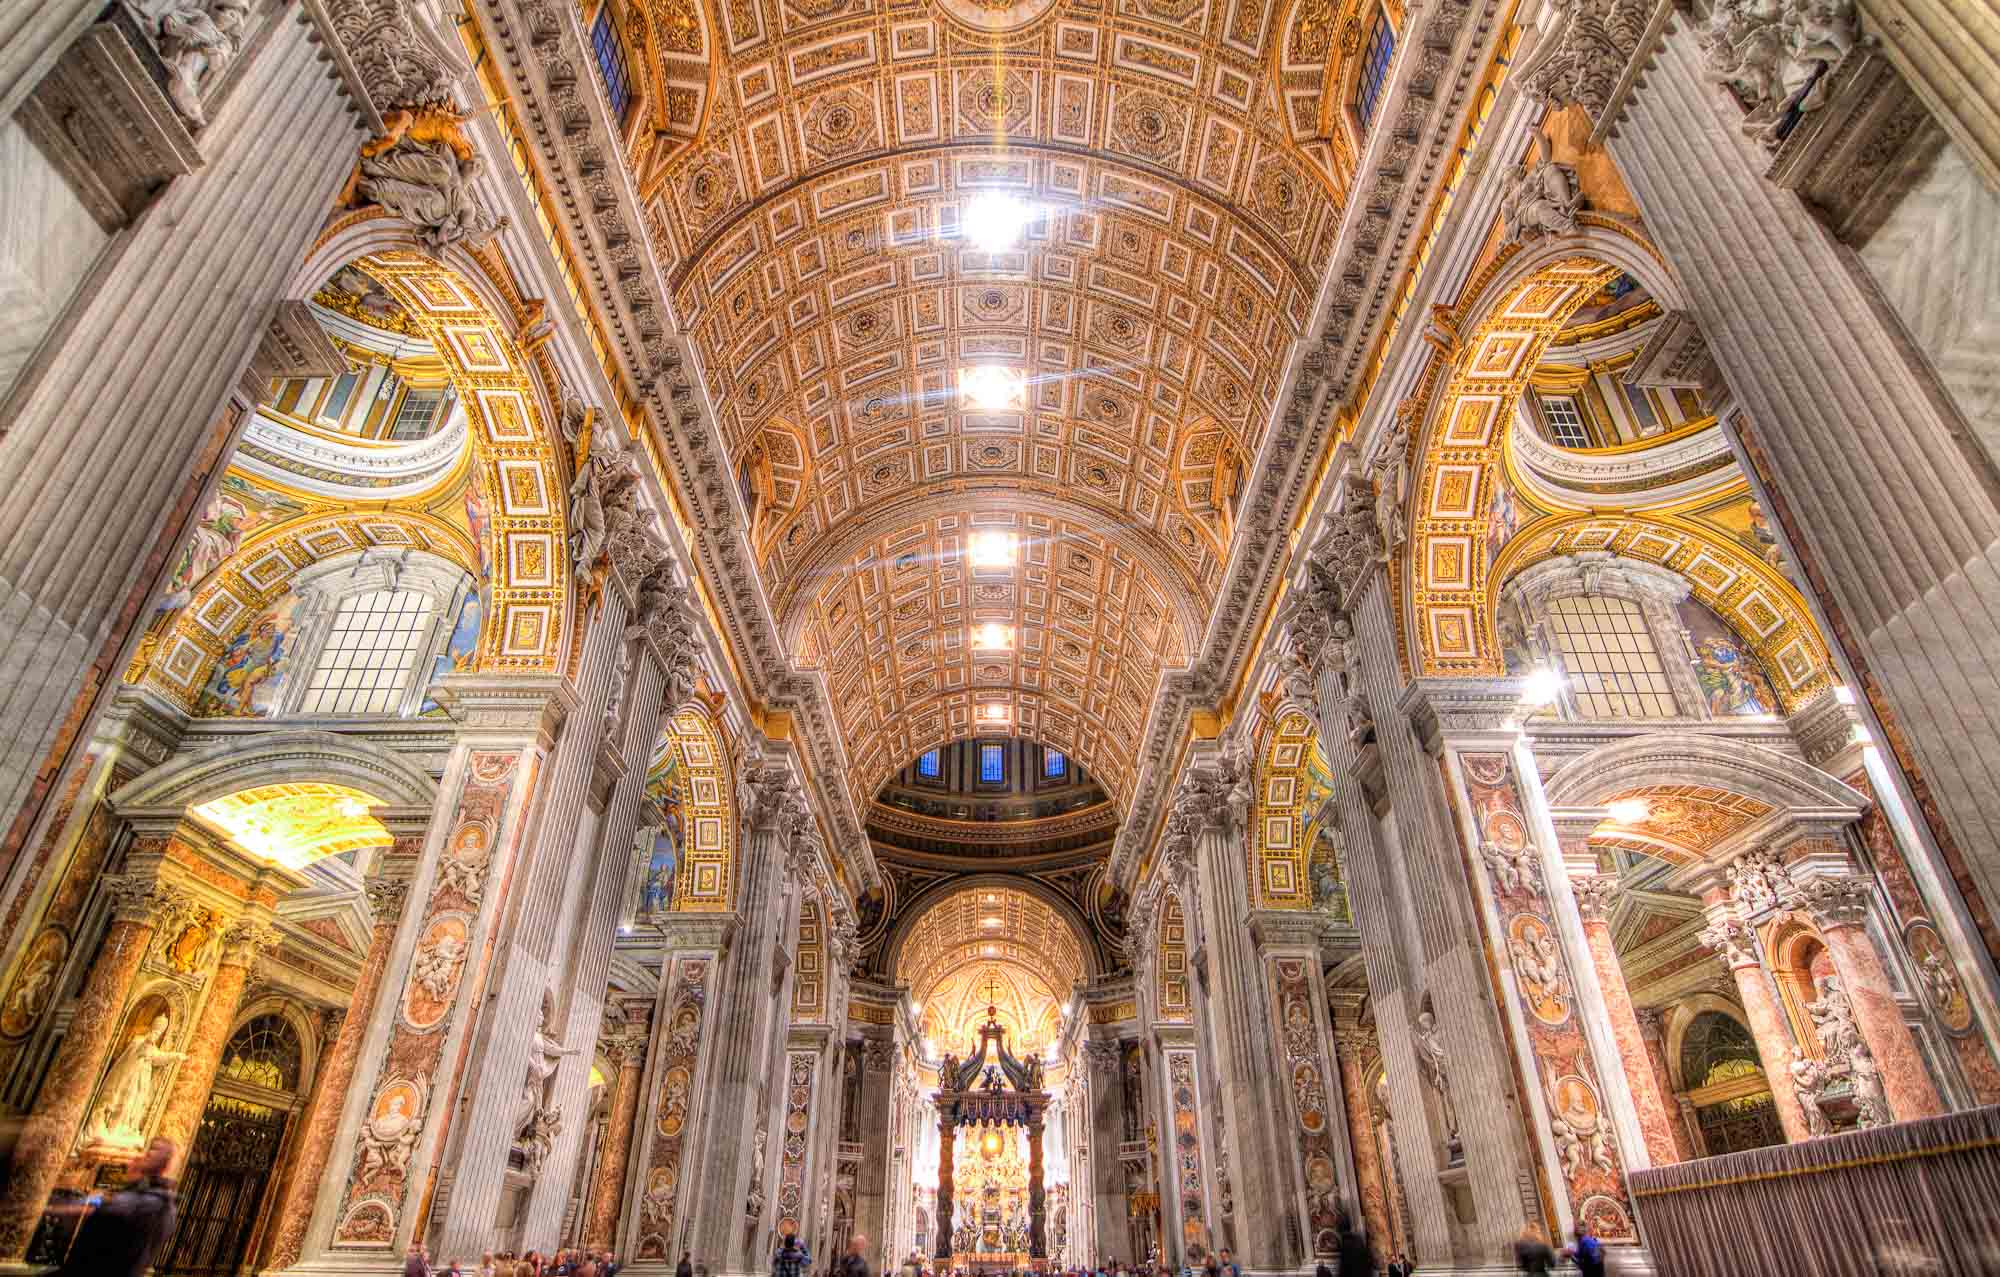  St. Pete's Basilica, Vatican City 